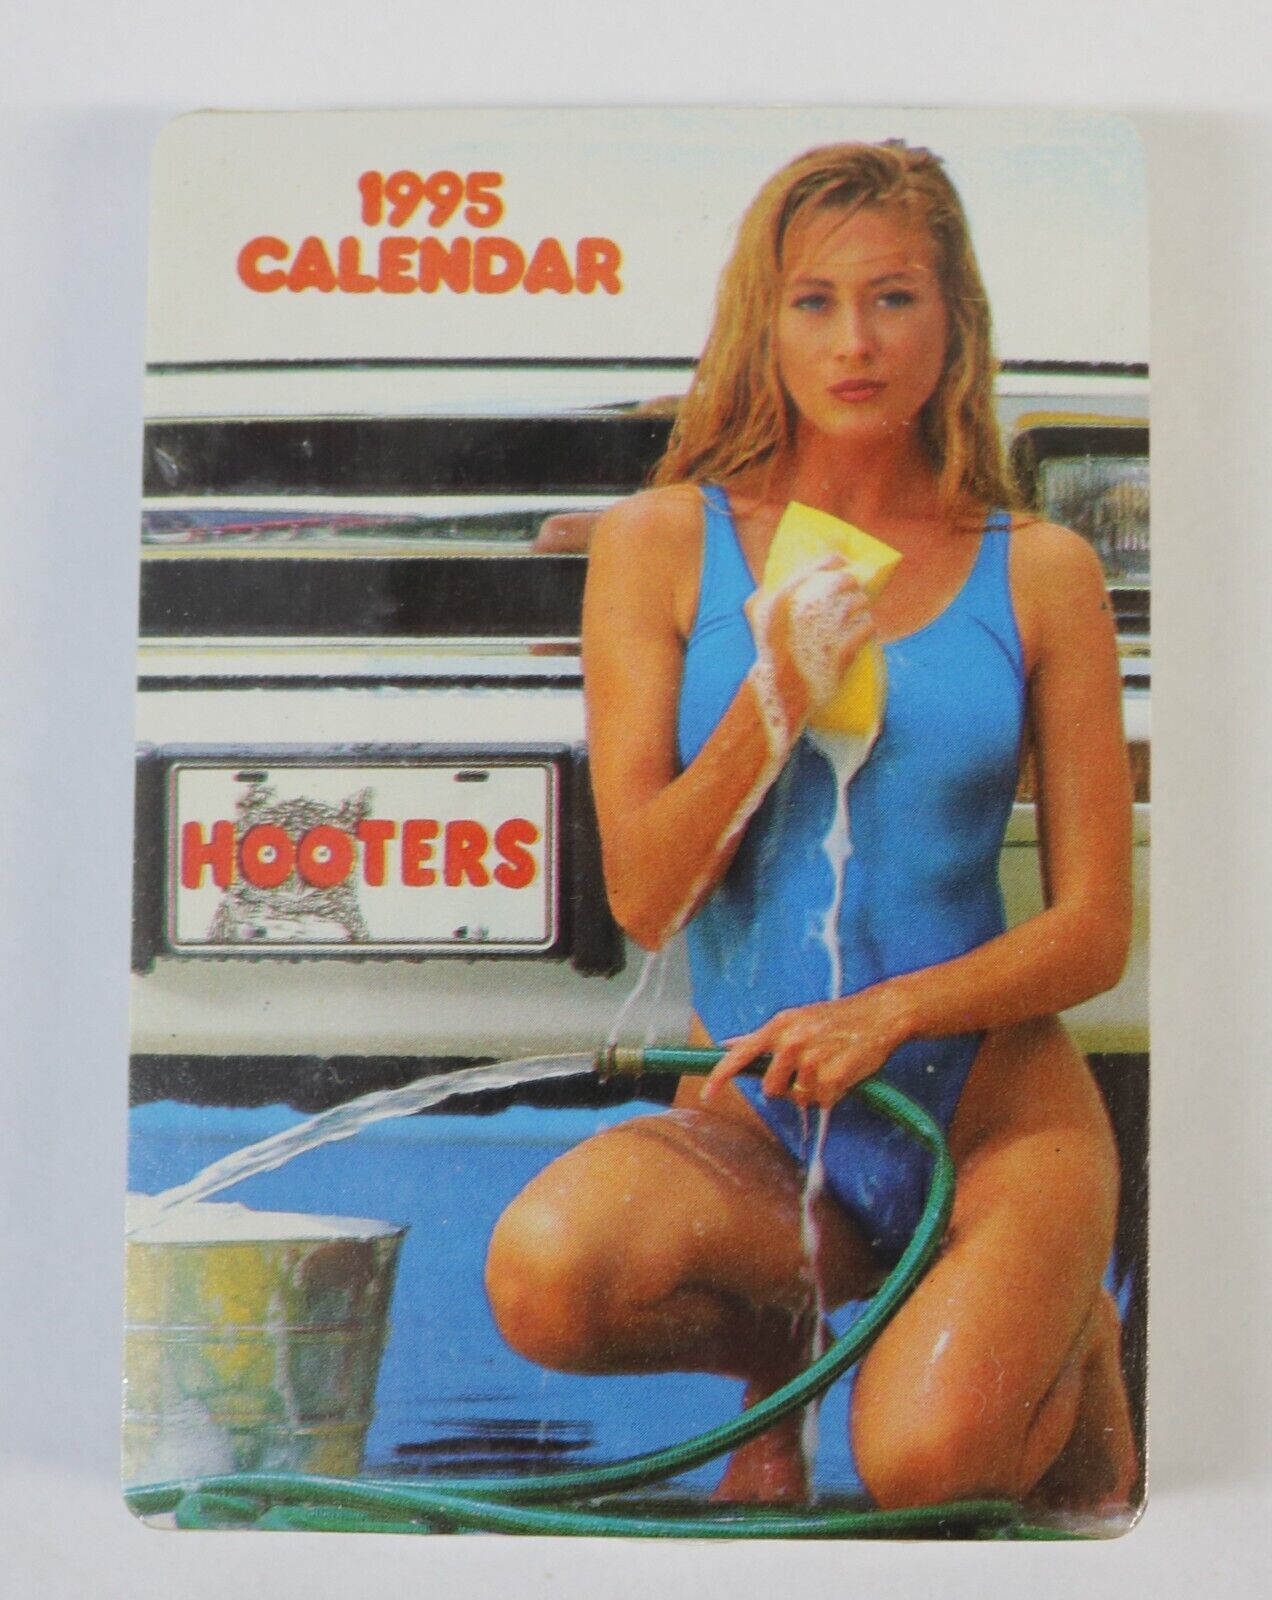 Hooters Calendar Girls Vintage 1995 Playing Cards Sealed Hoyle USA New Unopened - $19.99